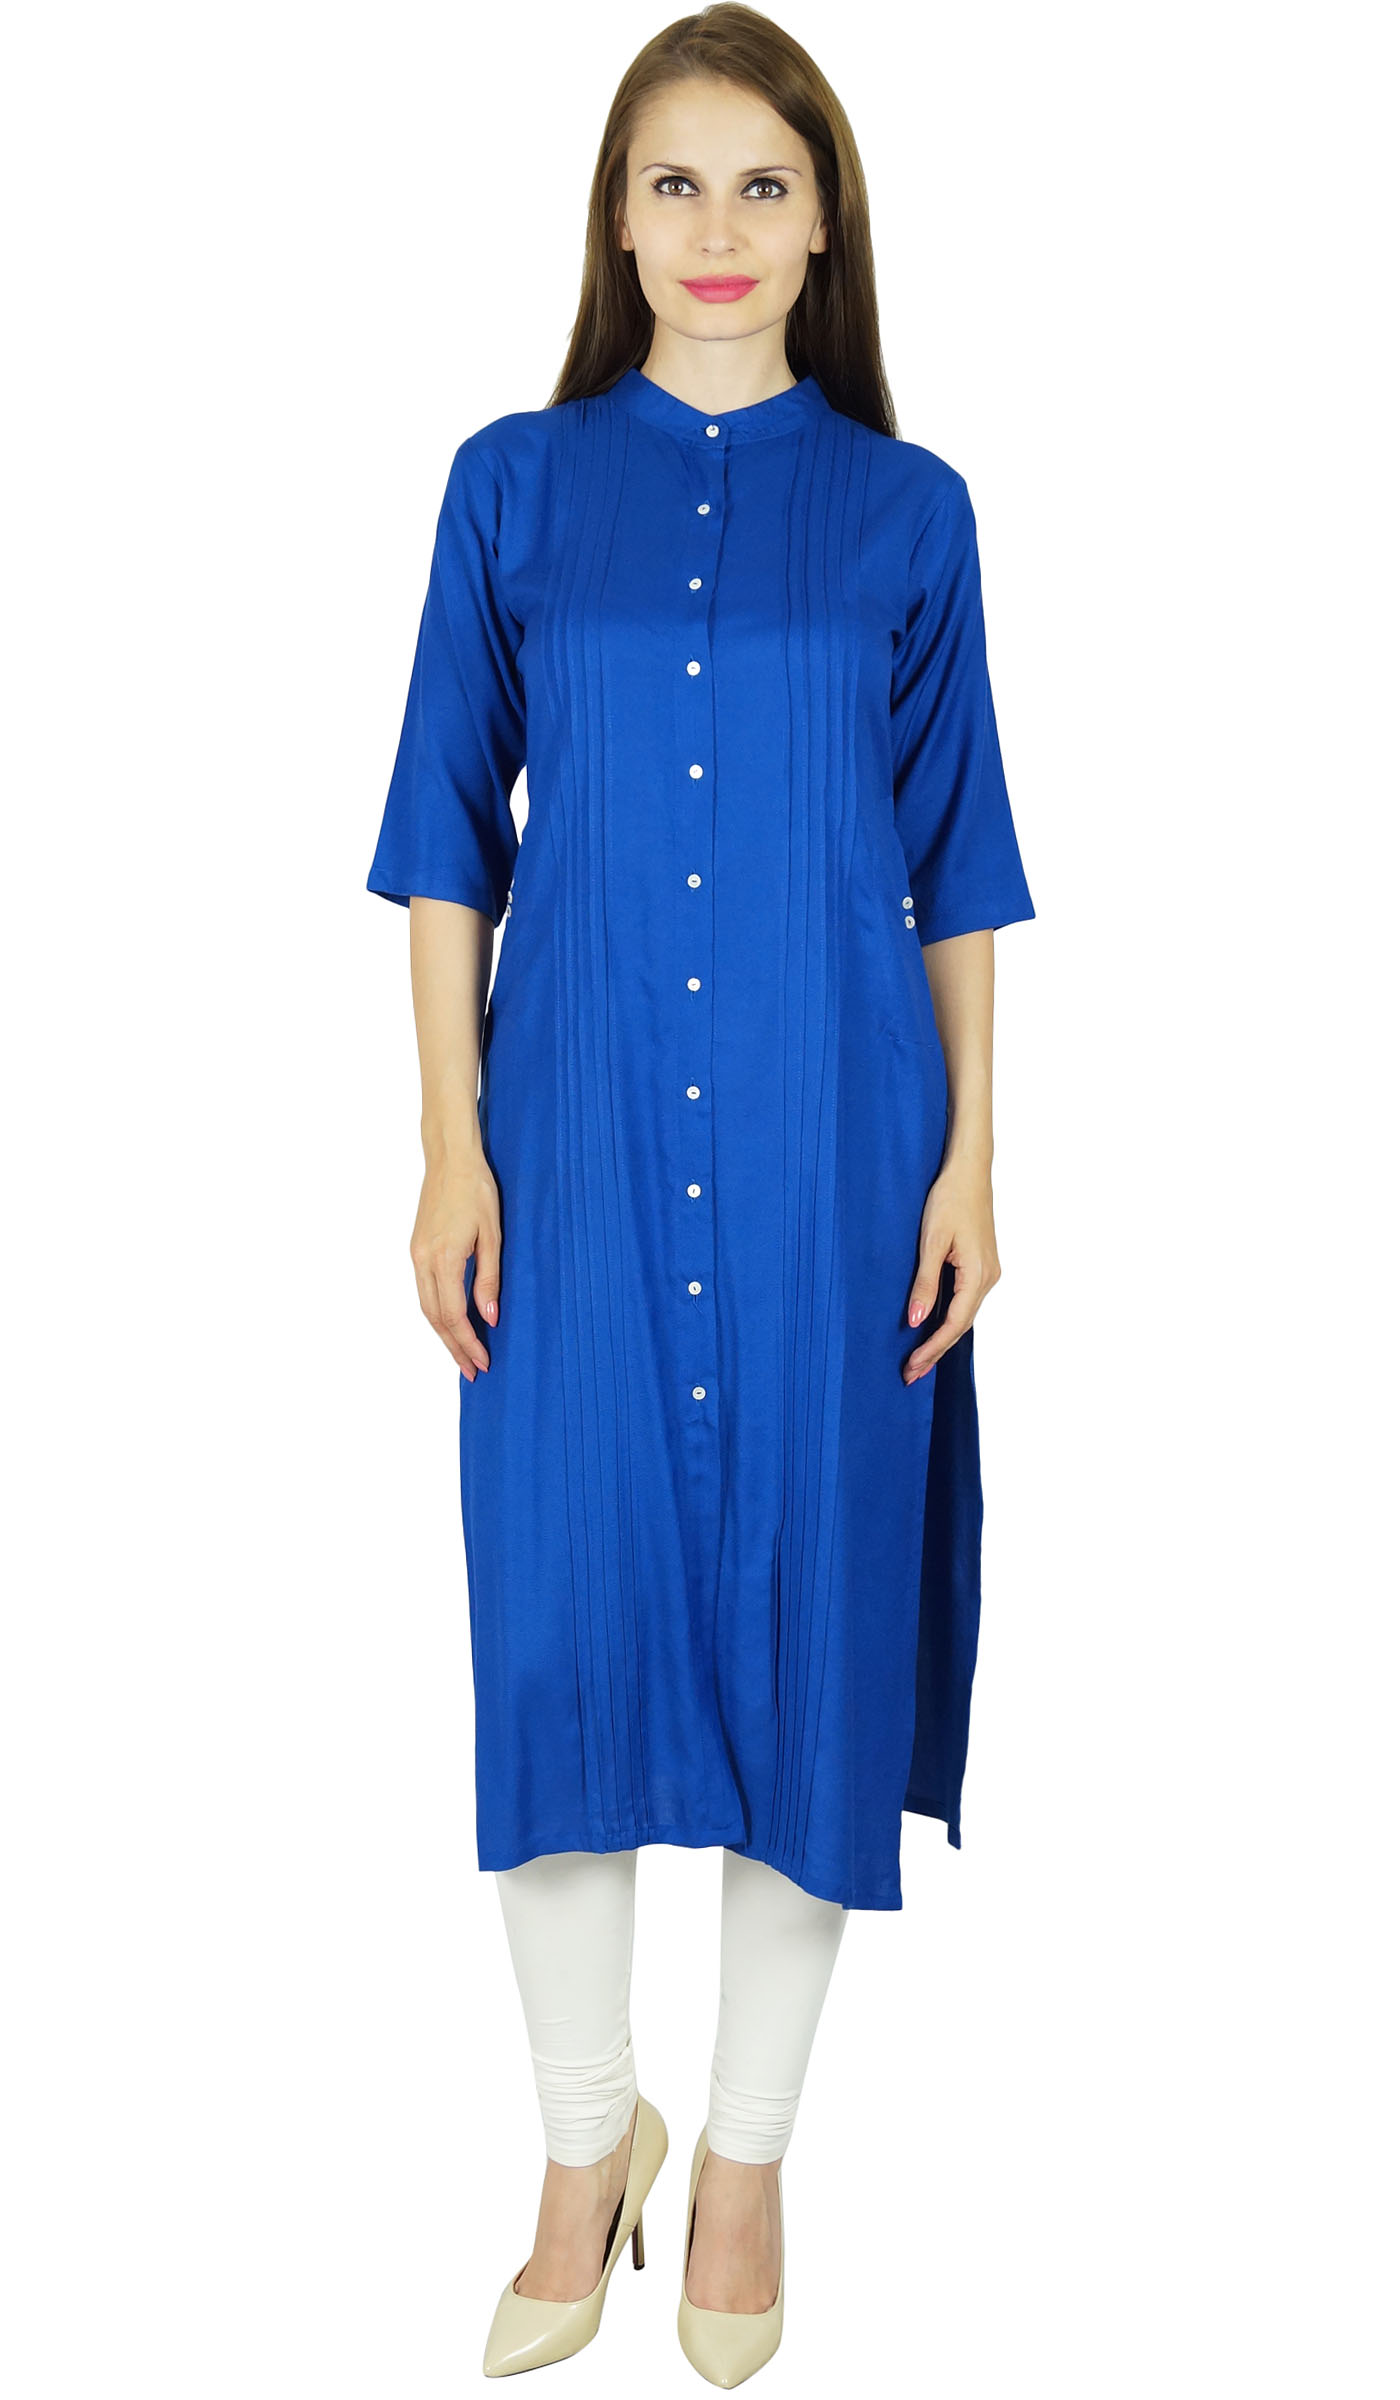 Bimba Women Blue Solid Rayon Kurta Kurti 3/4 Sleeve Casual Formal Tunic Blouse 